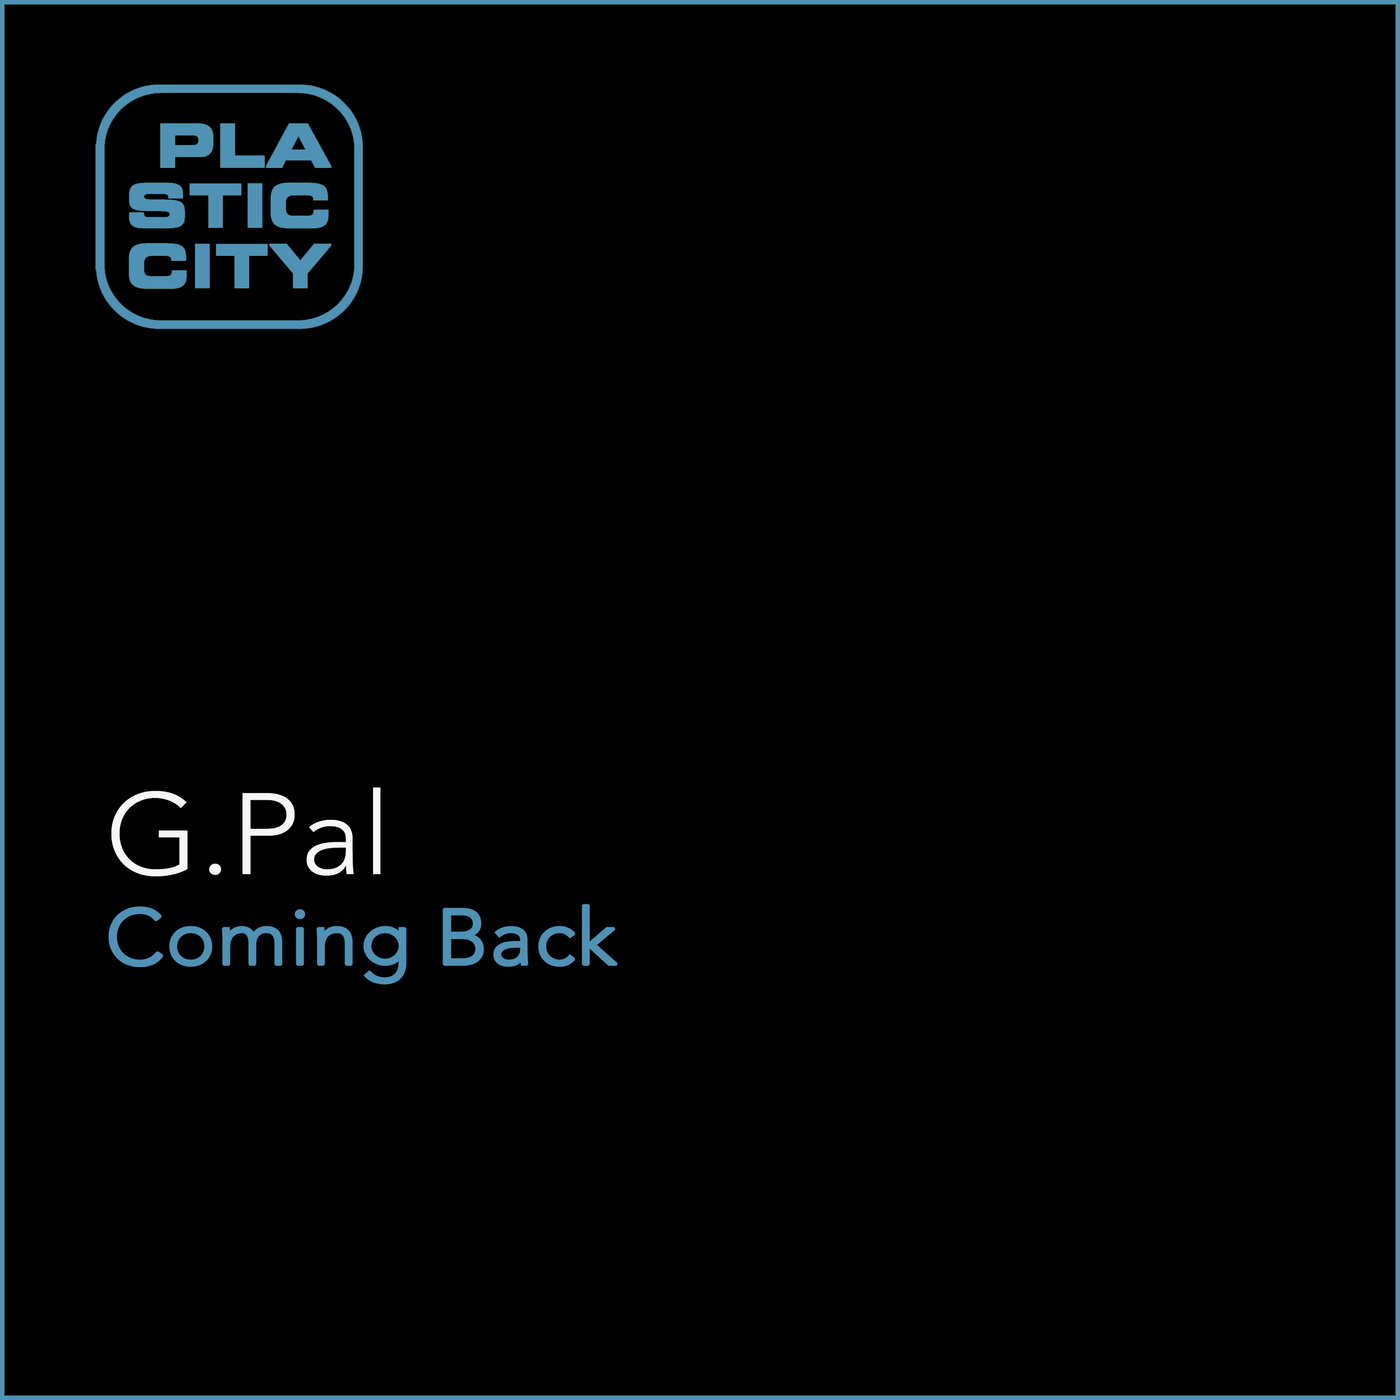 G.Pal - Coming Back / Plastic City